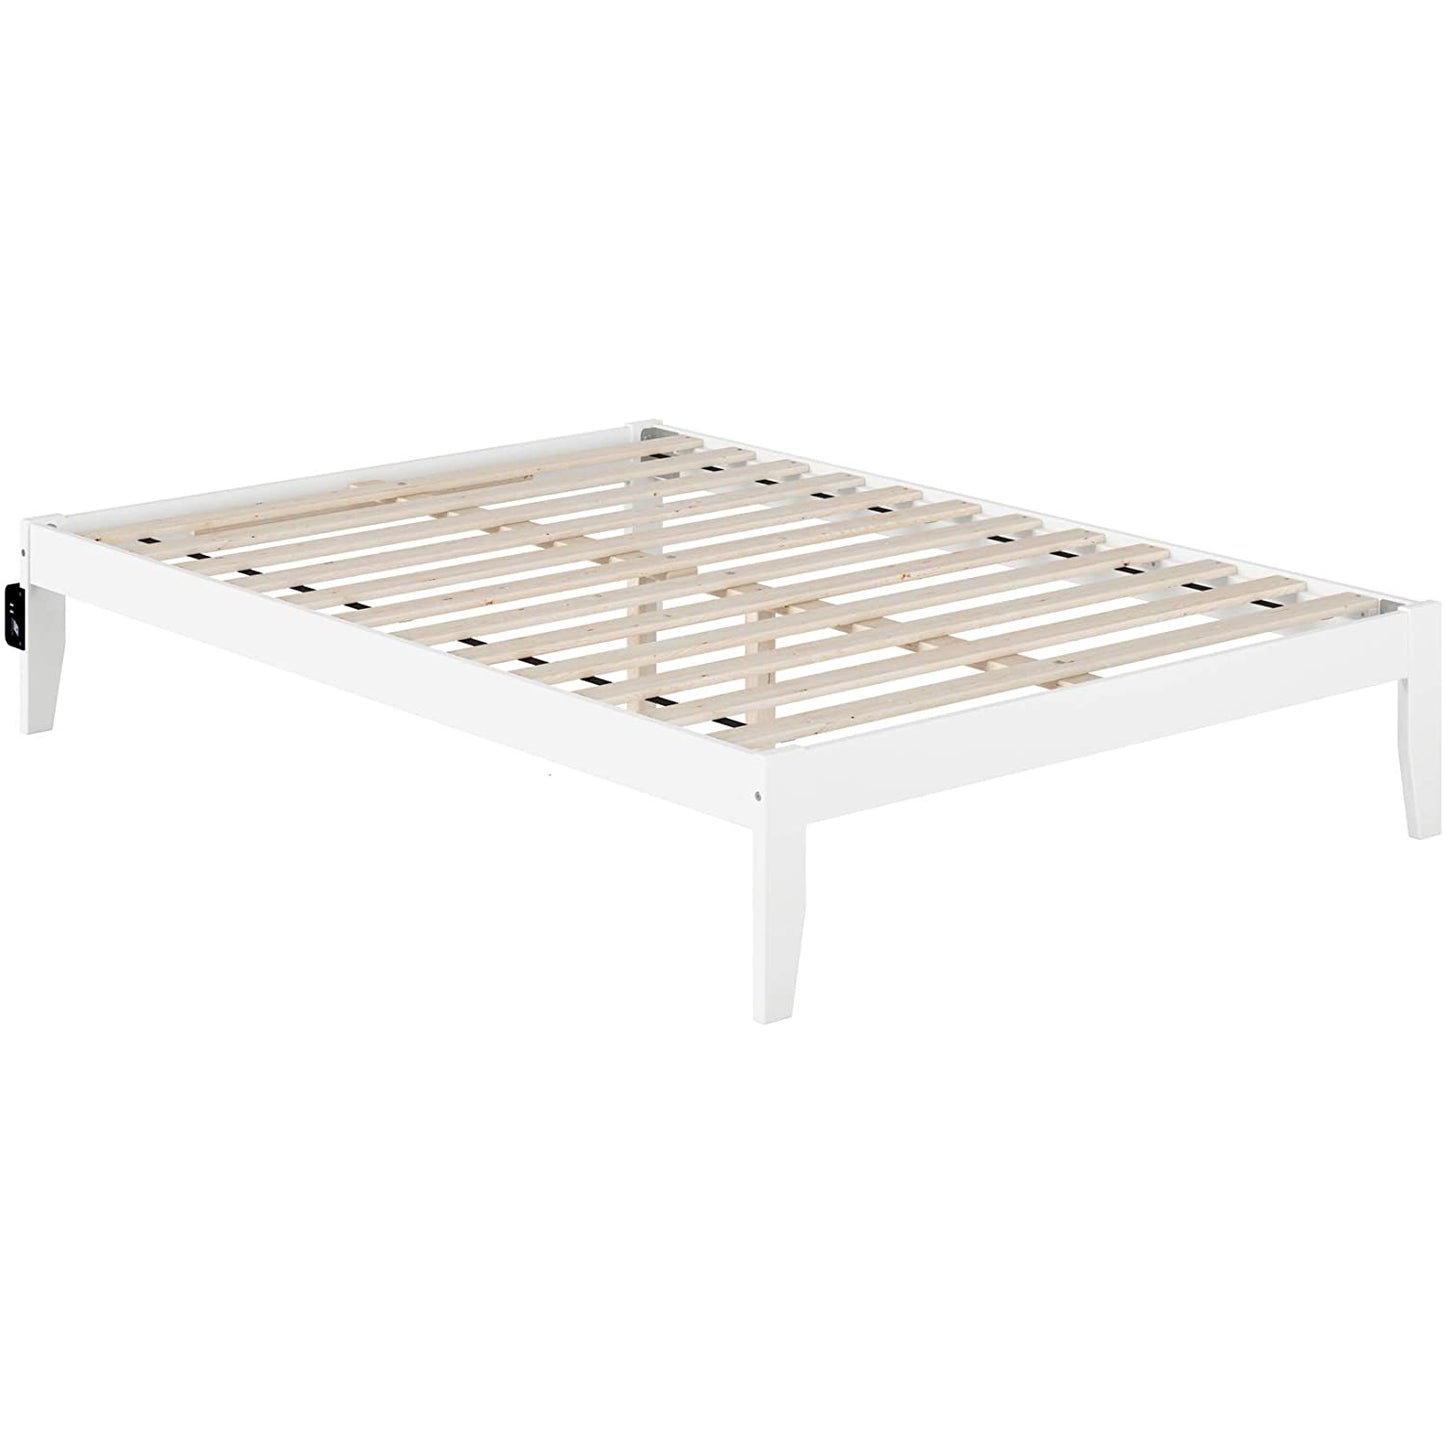 Wood Platform Bed With Storage Space